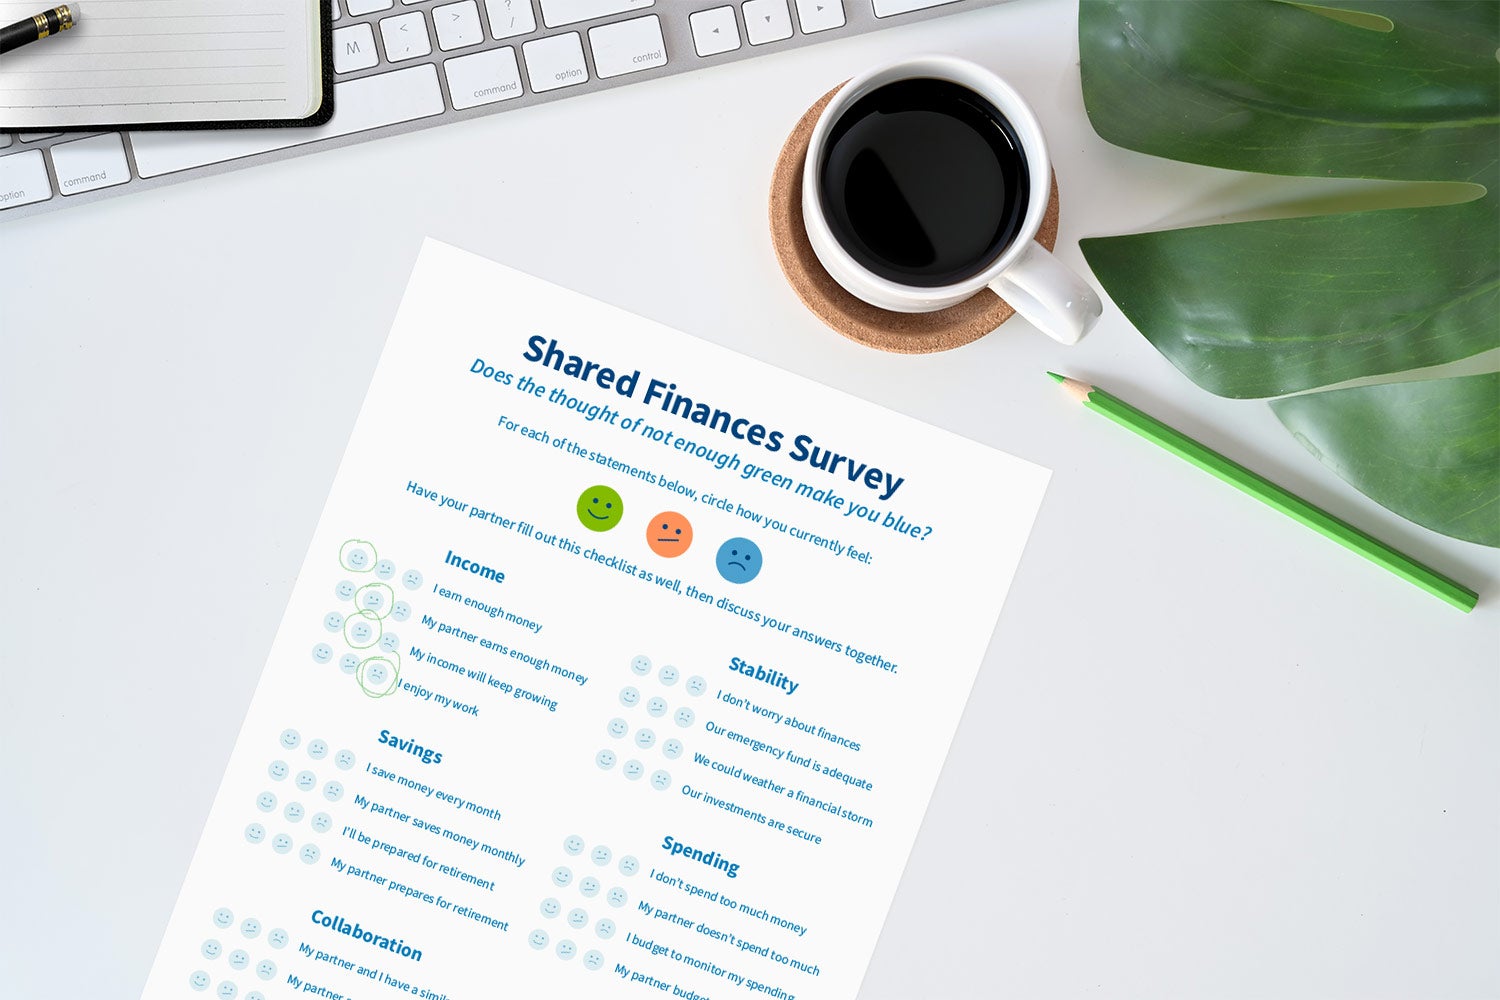 Shared finances survey